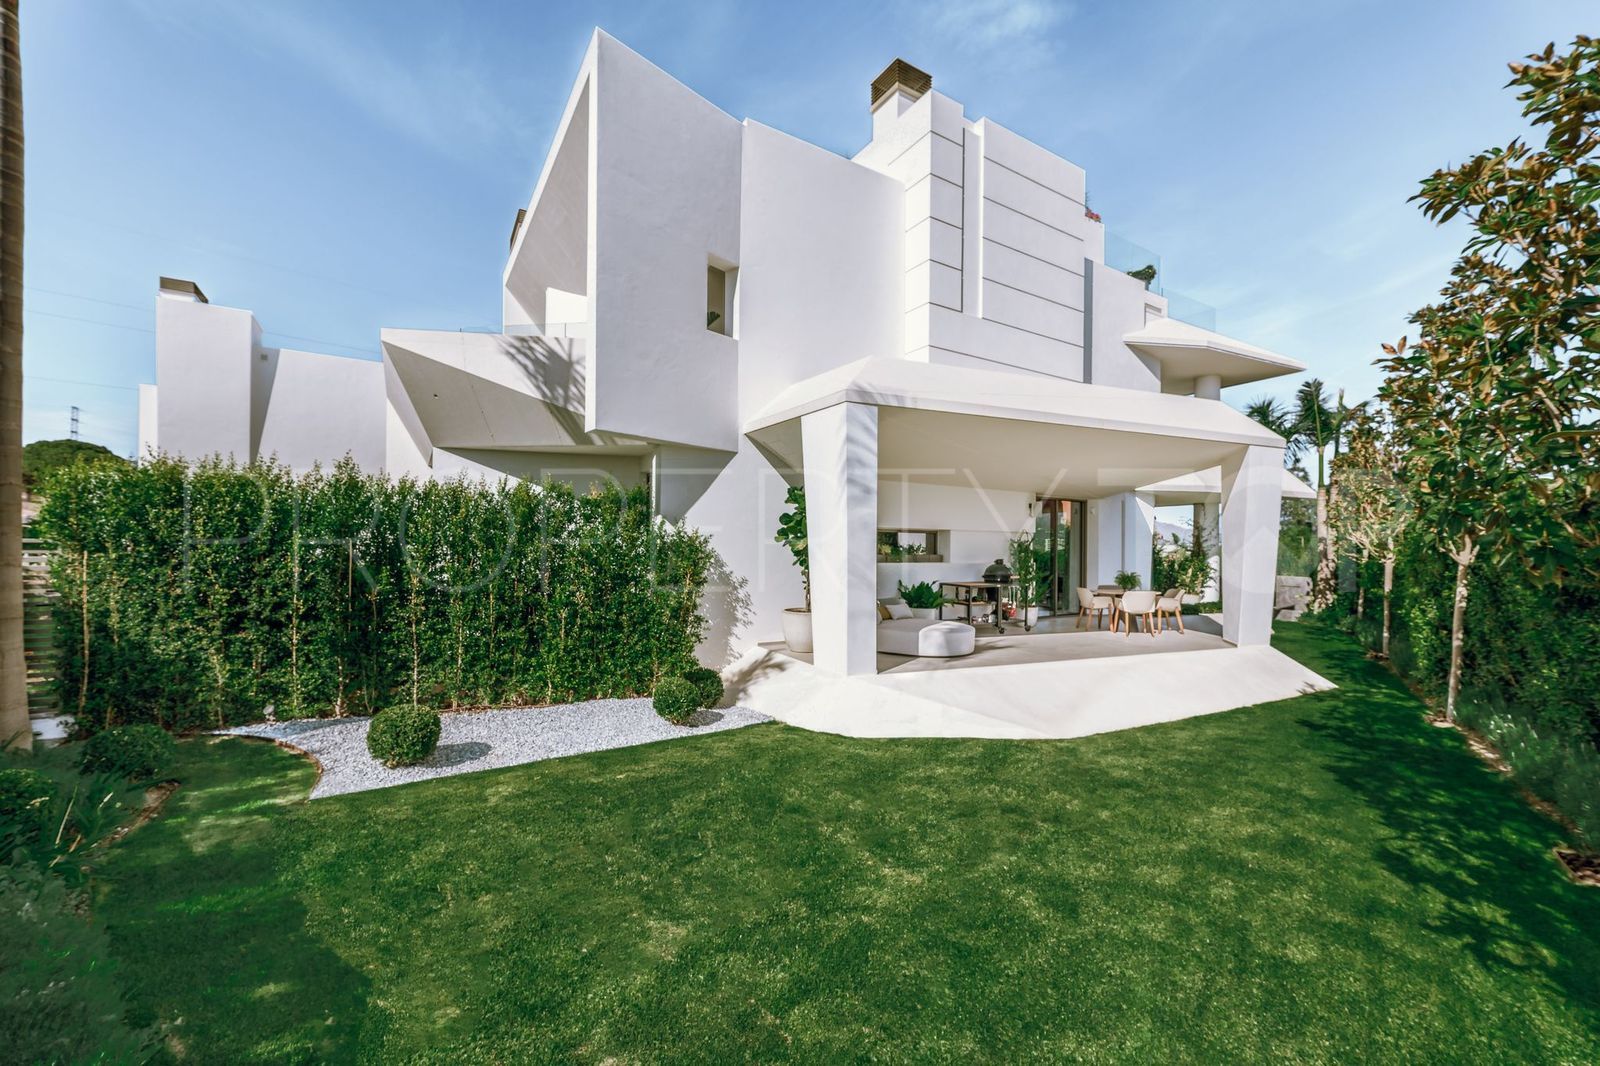 4 bedrooms semi detached house for sale in Celeste Marbella